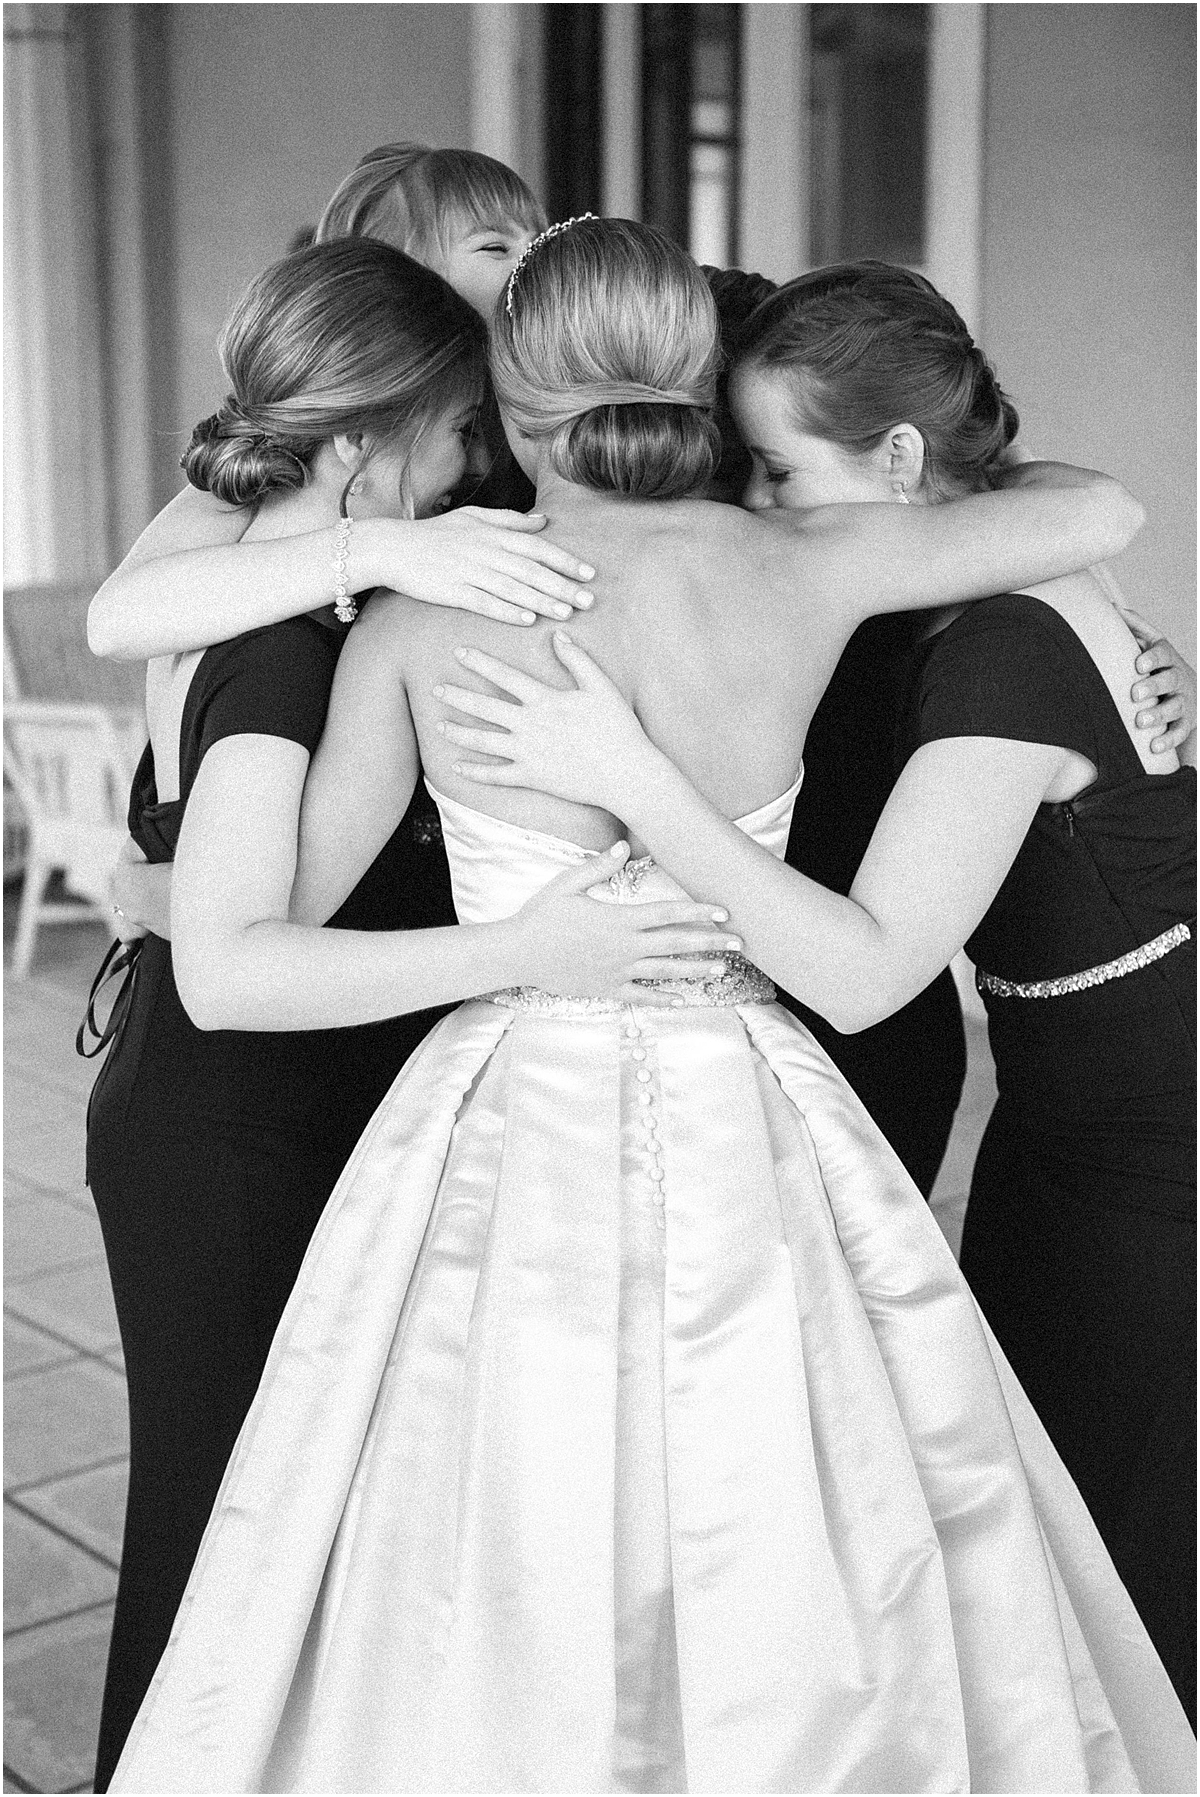 heartfelt emotional wedding imagery from Chicago wedding photographer, Alex Ferreri